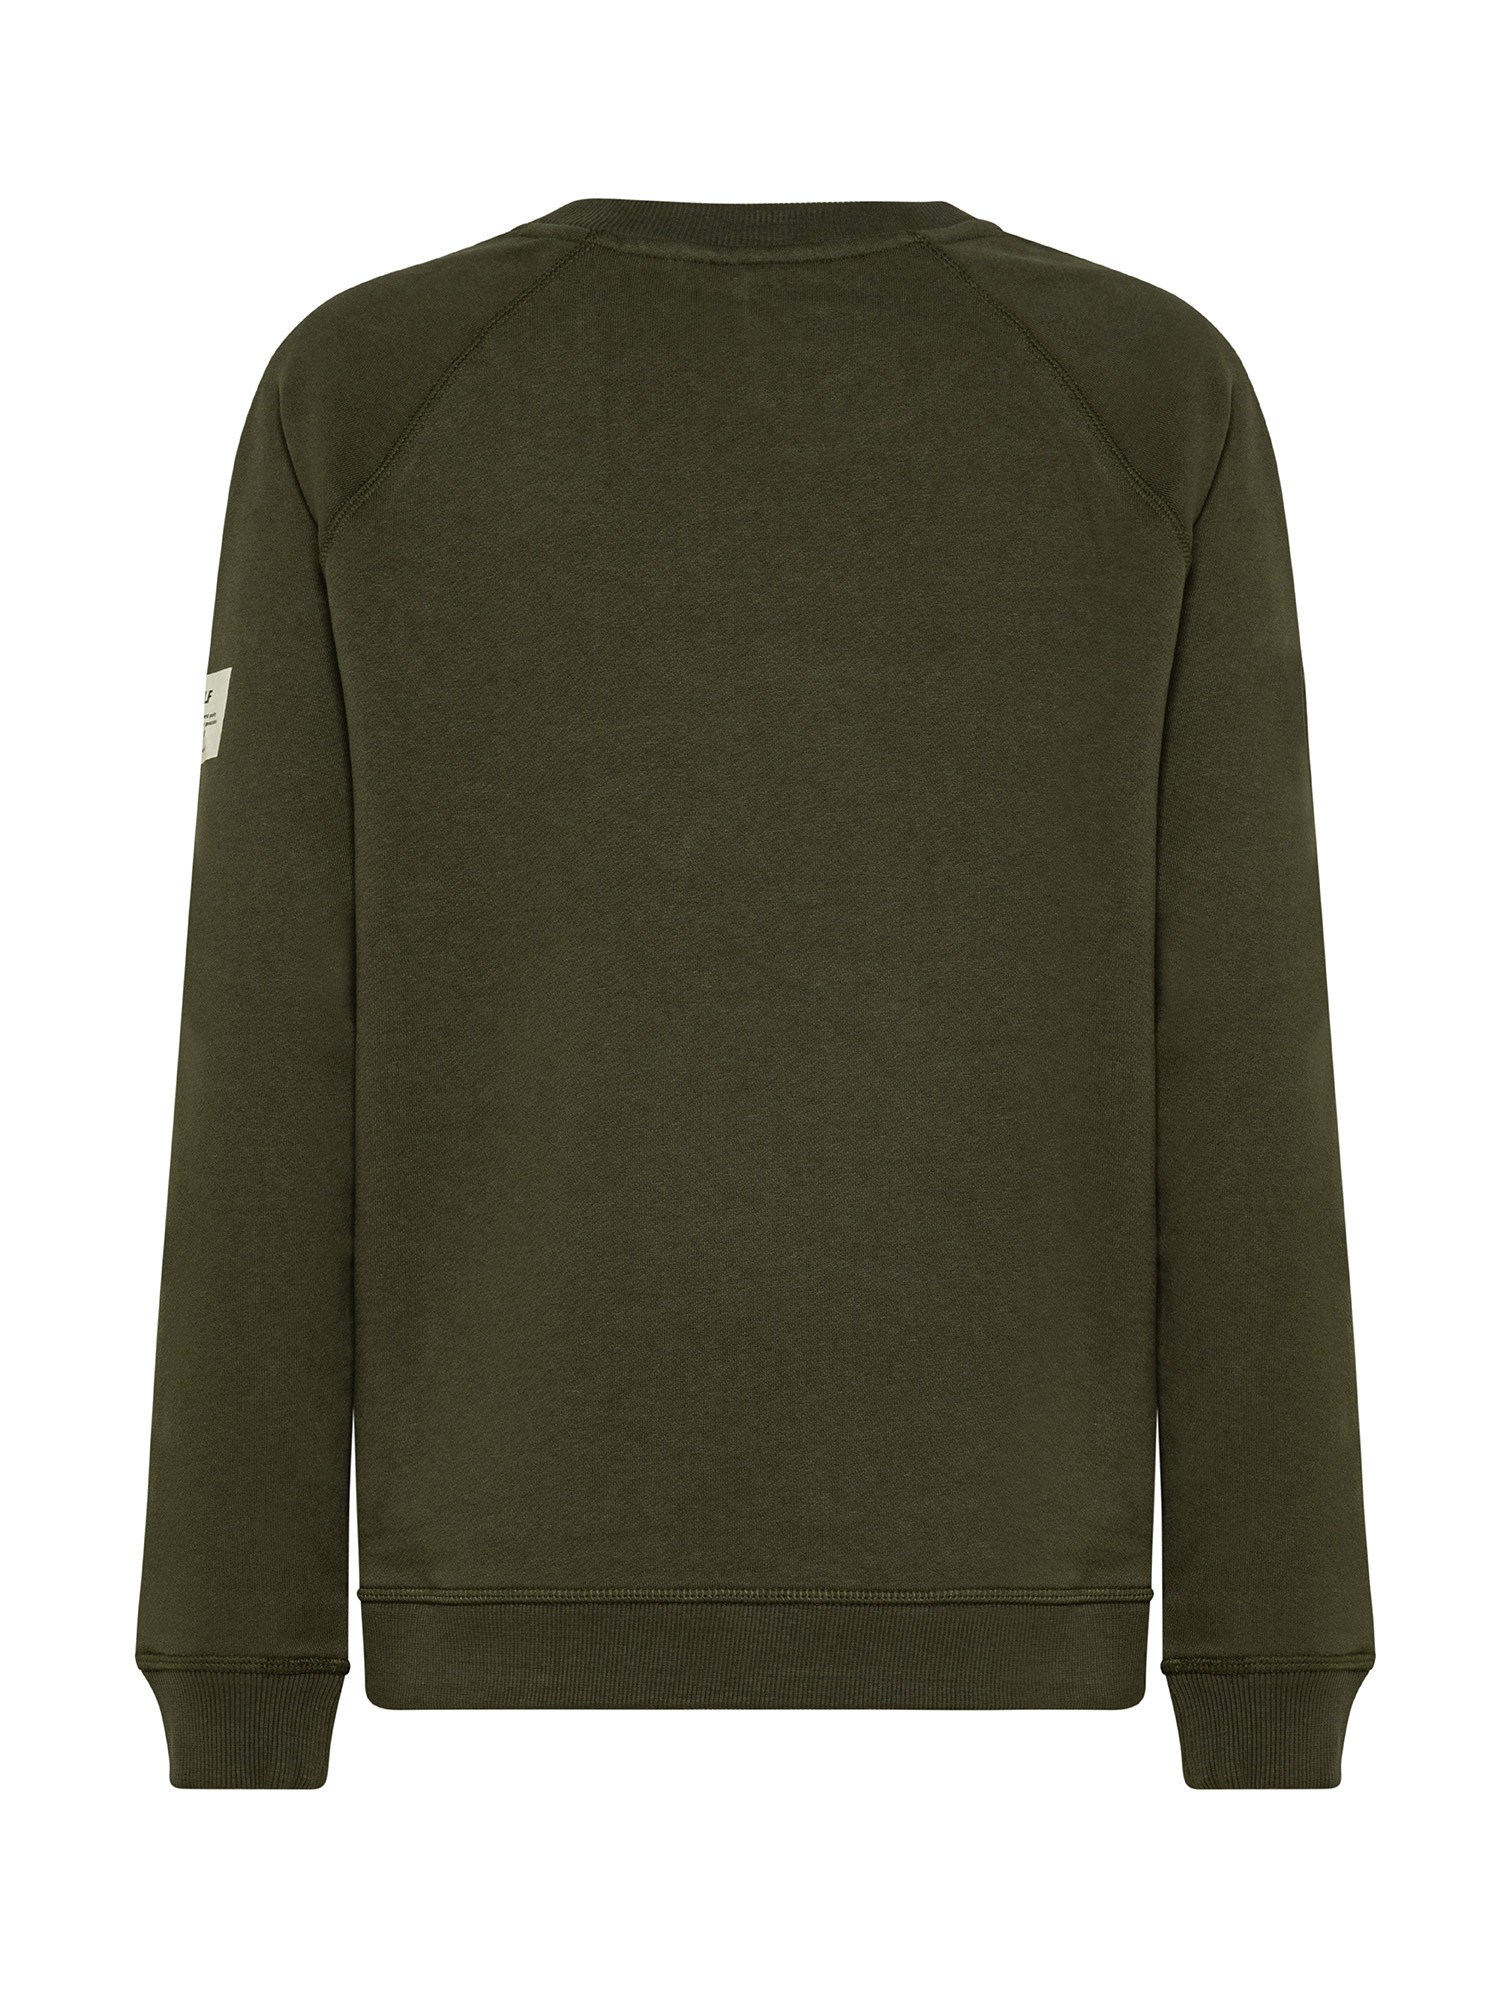 Ecoalf - Sirah sweatshirt with print, Dark Green, large image number 1